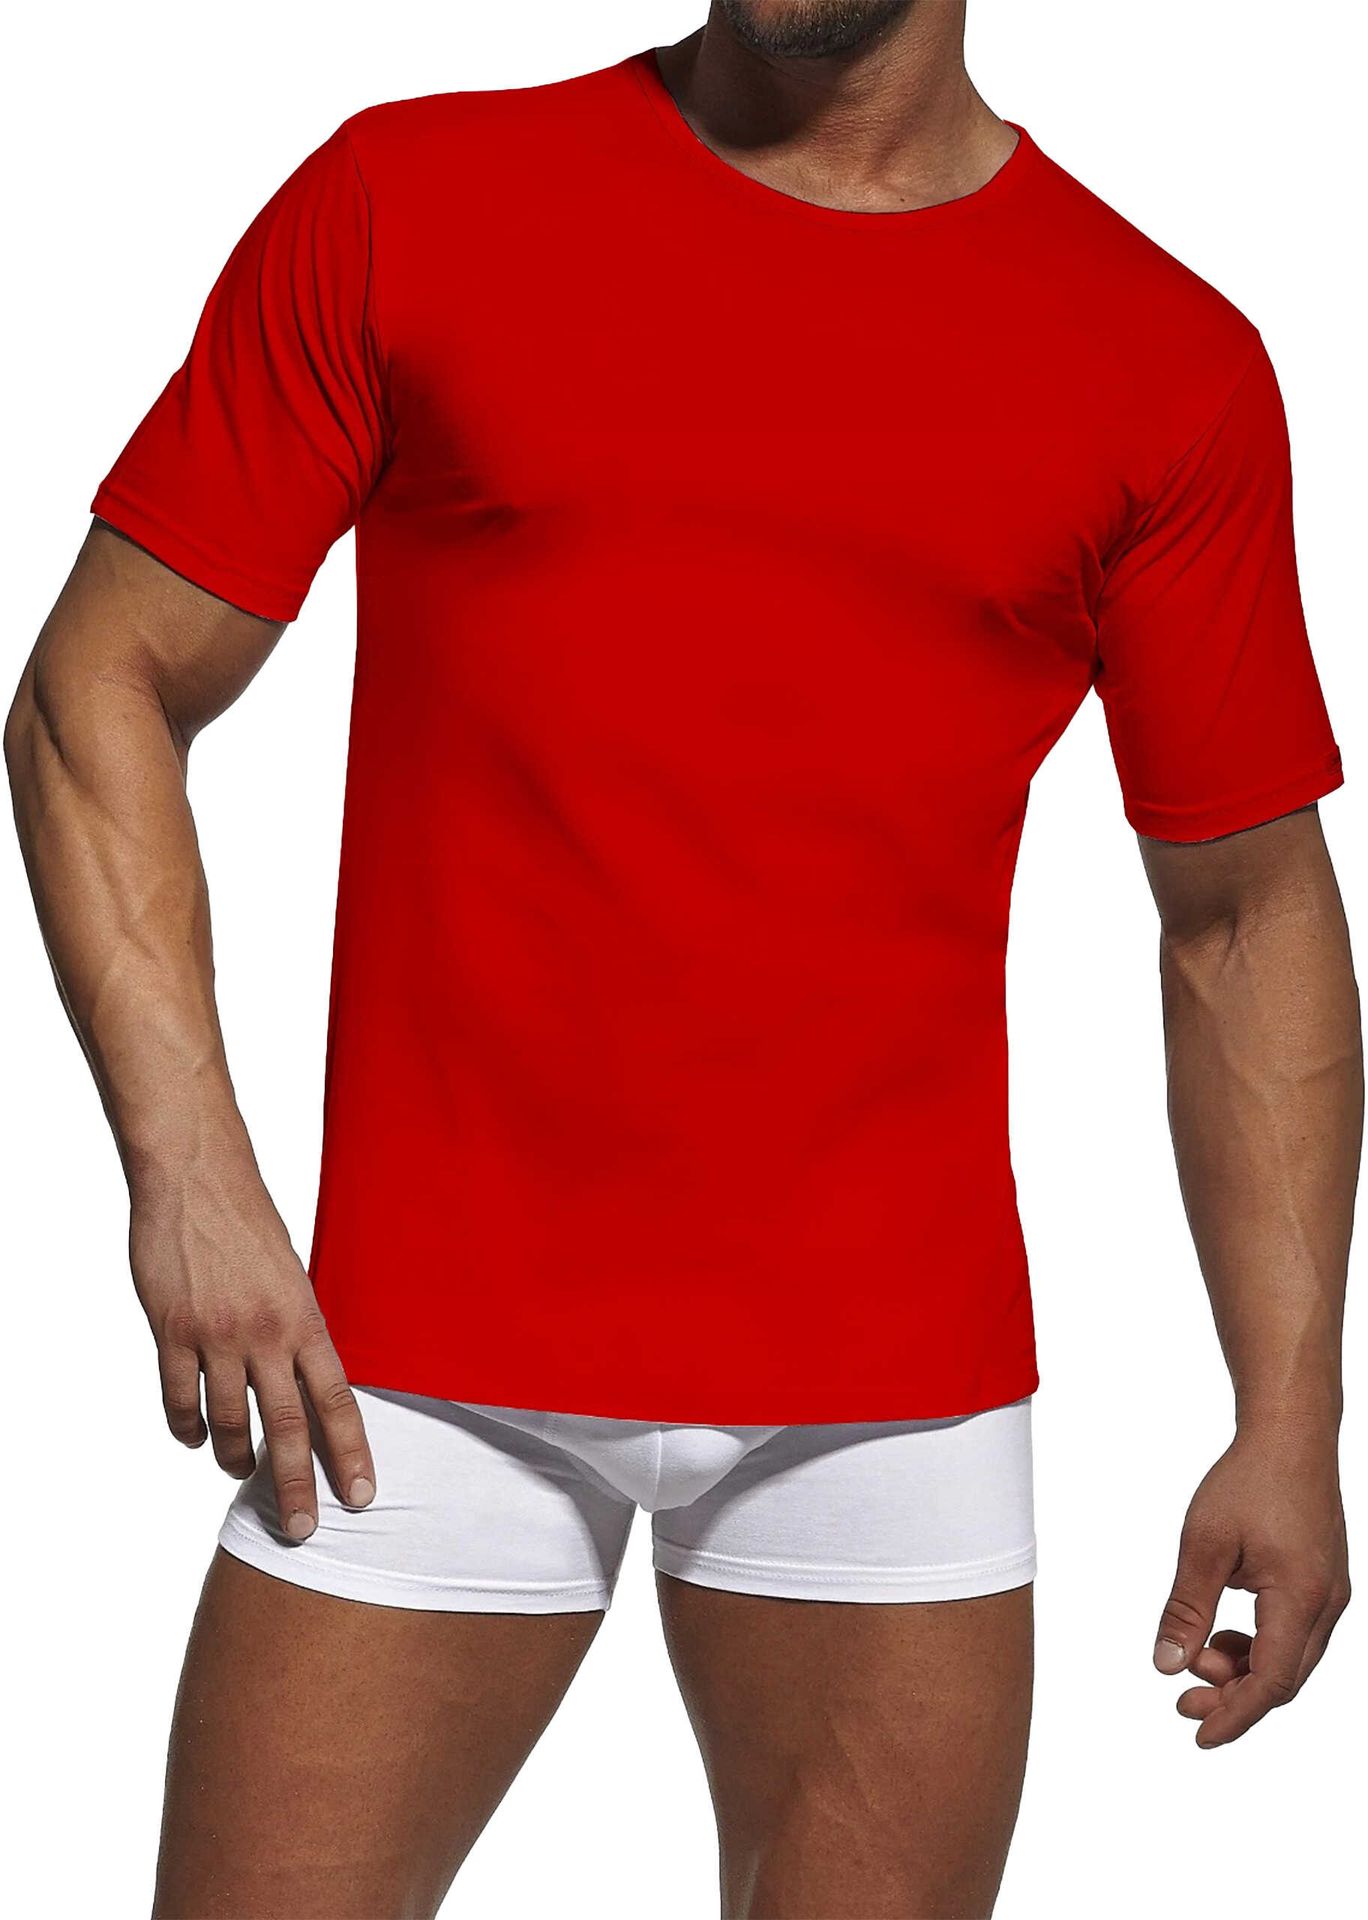 Koszulka Authentic 202 New czerwona Cornette